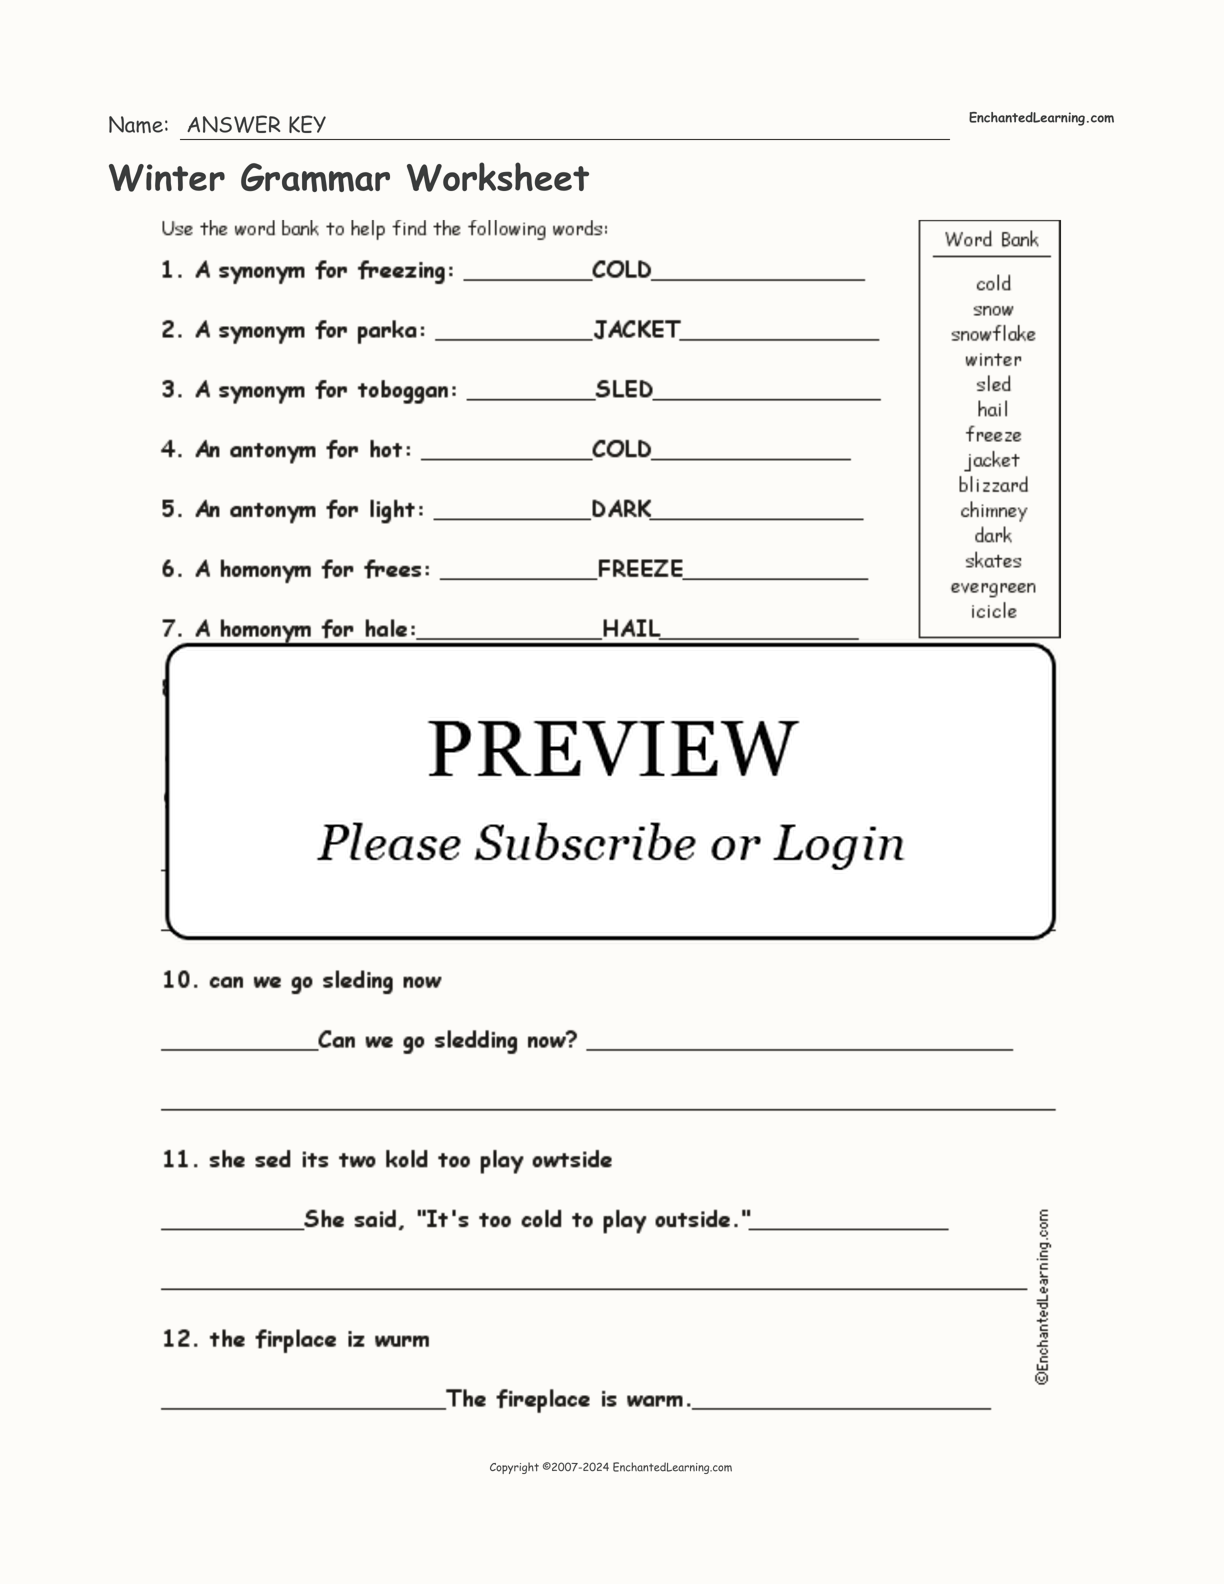 Winter Grammar Worksheet interactive worksheet page 2